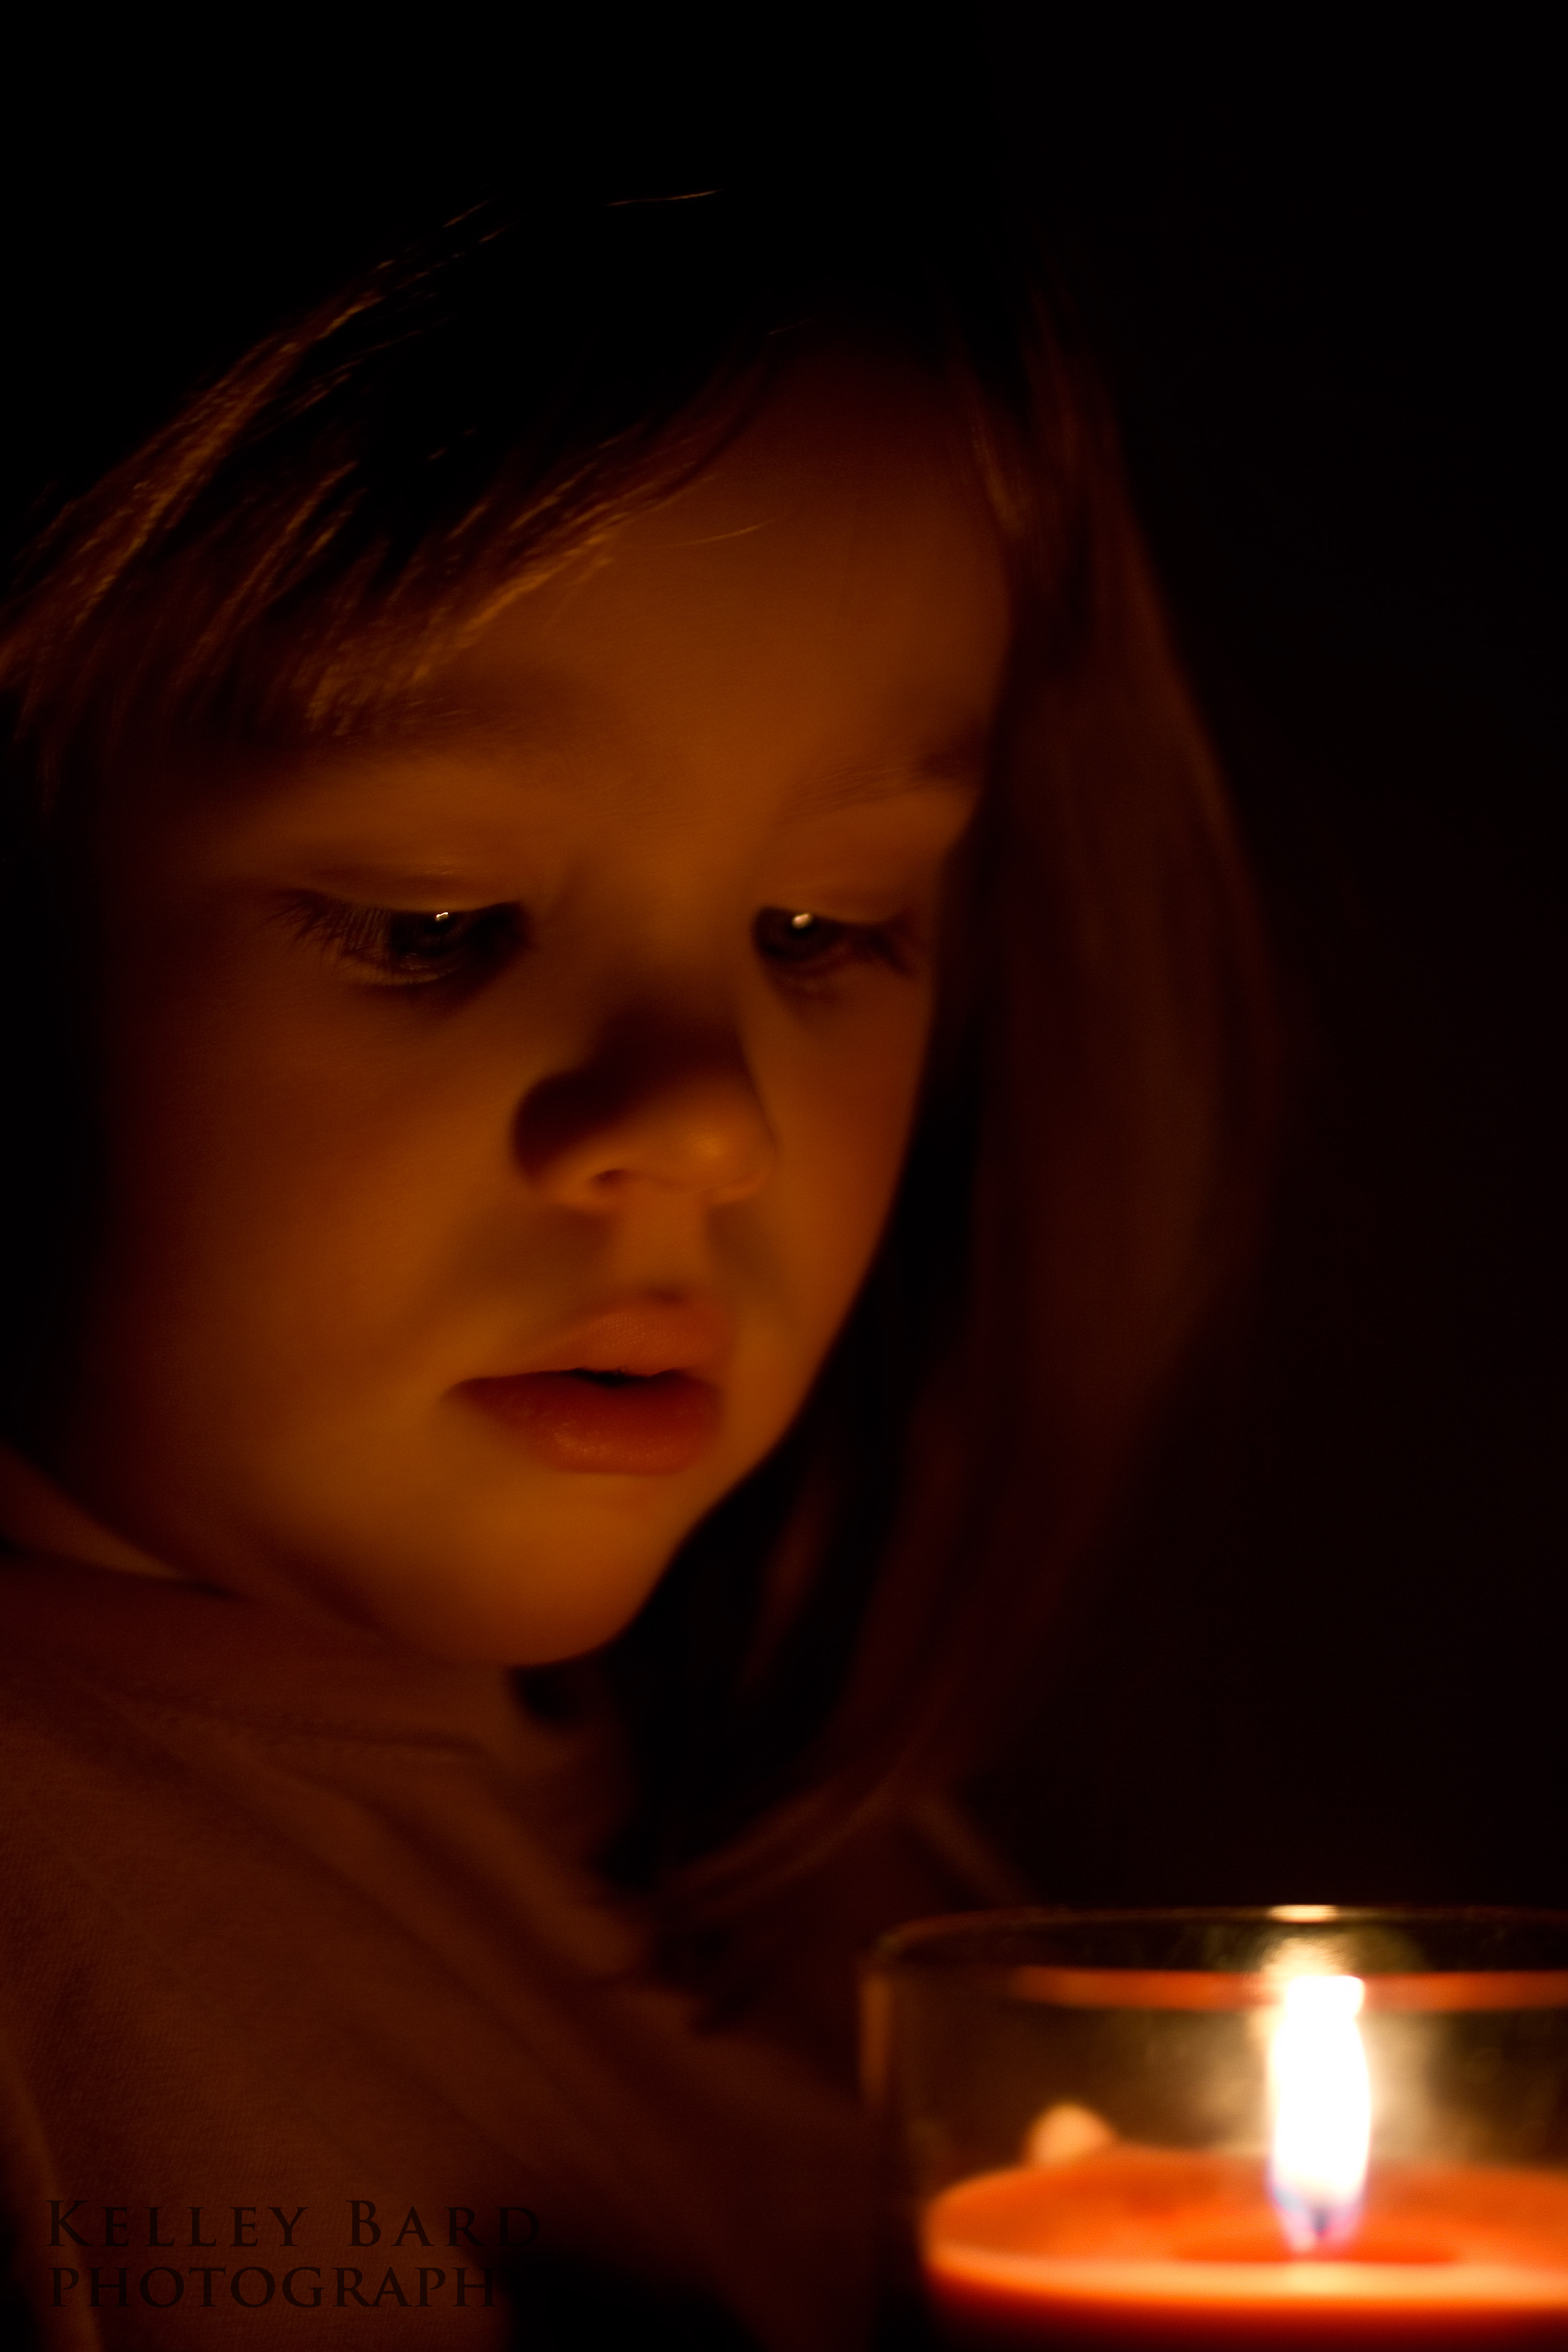 Child Holding Light | Kelley Bard Photography- The PhotoBlog